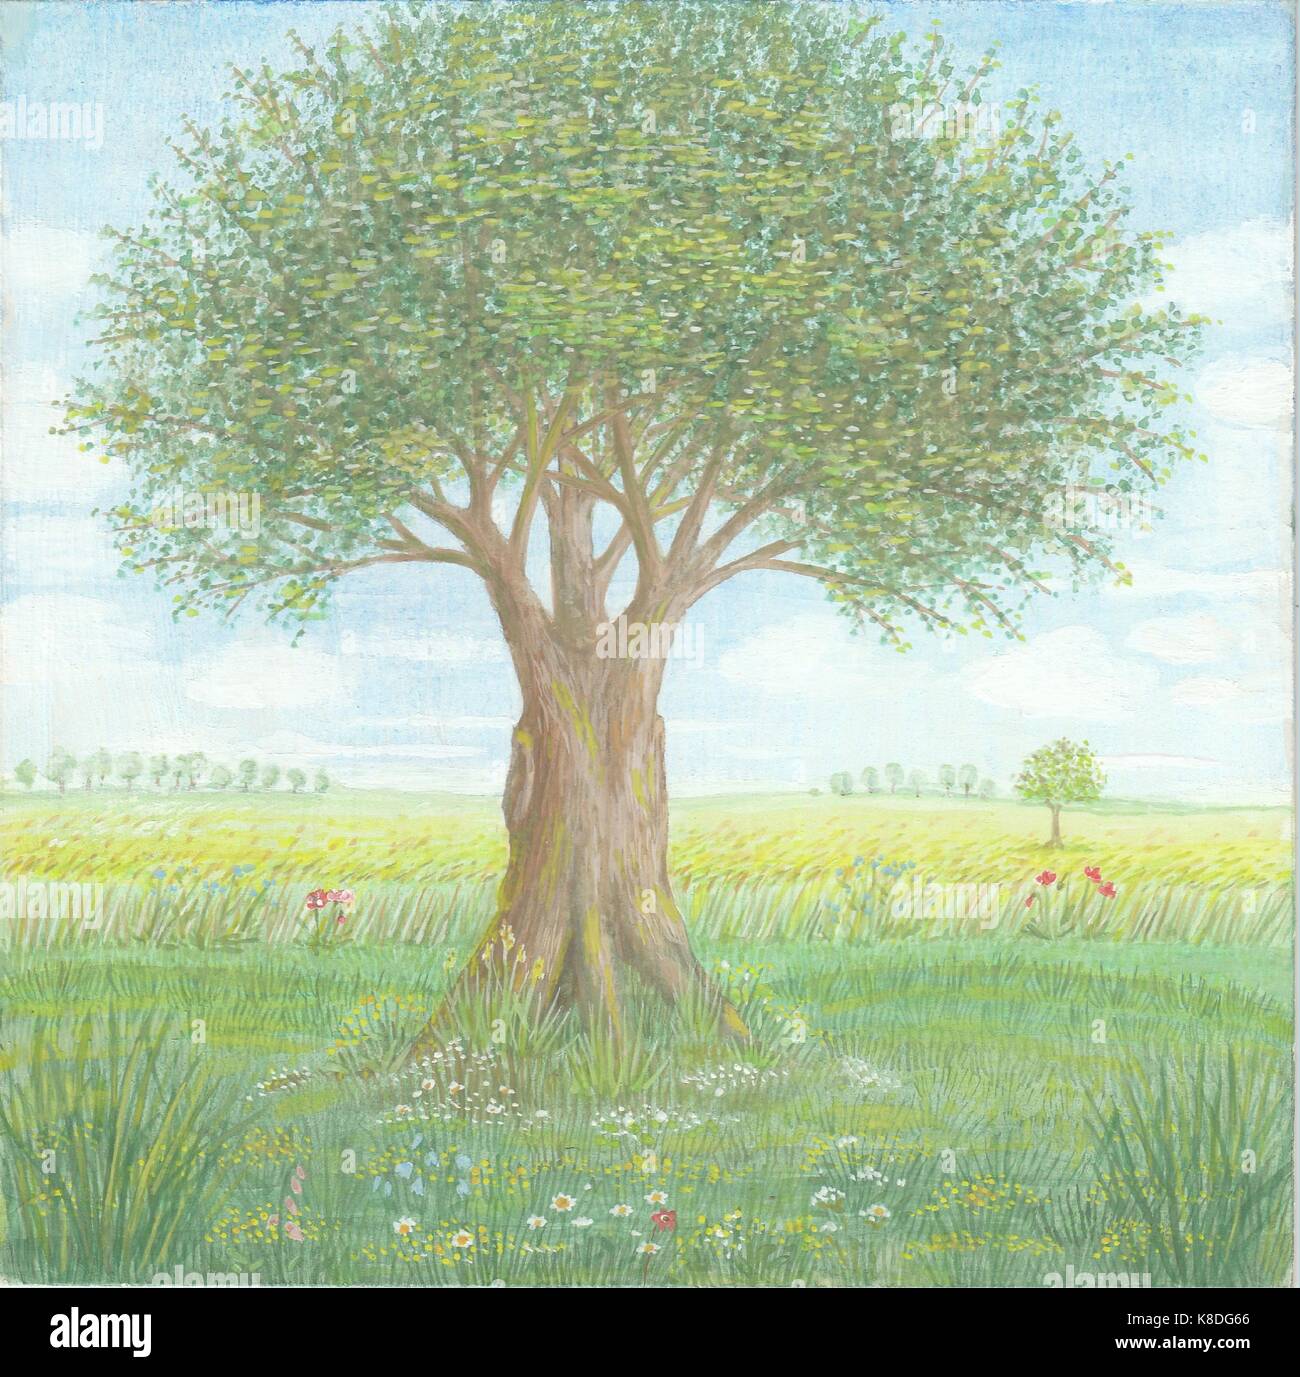 Der Baum14-15 Illustrazione Vettoriale